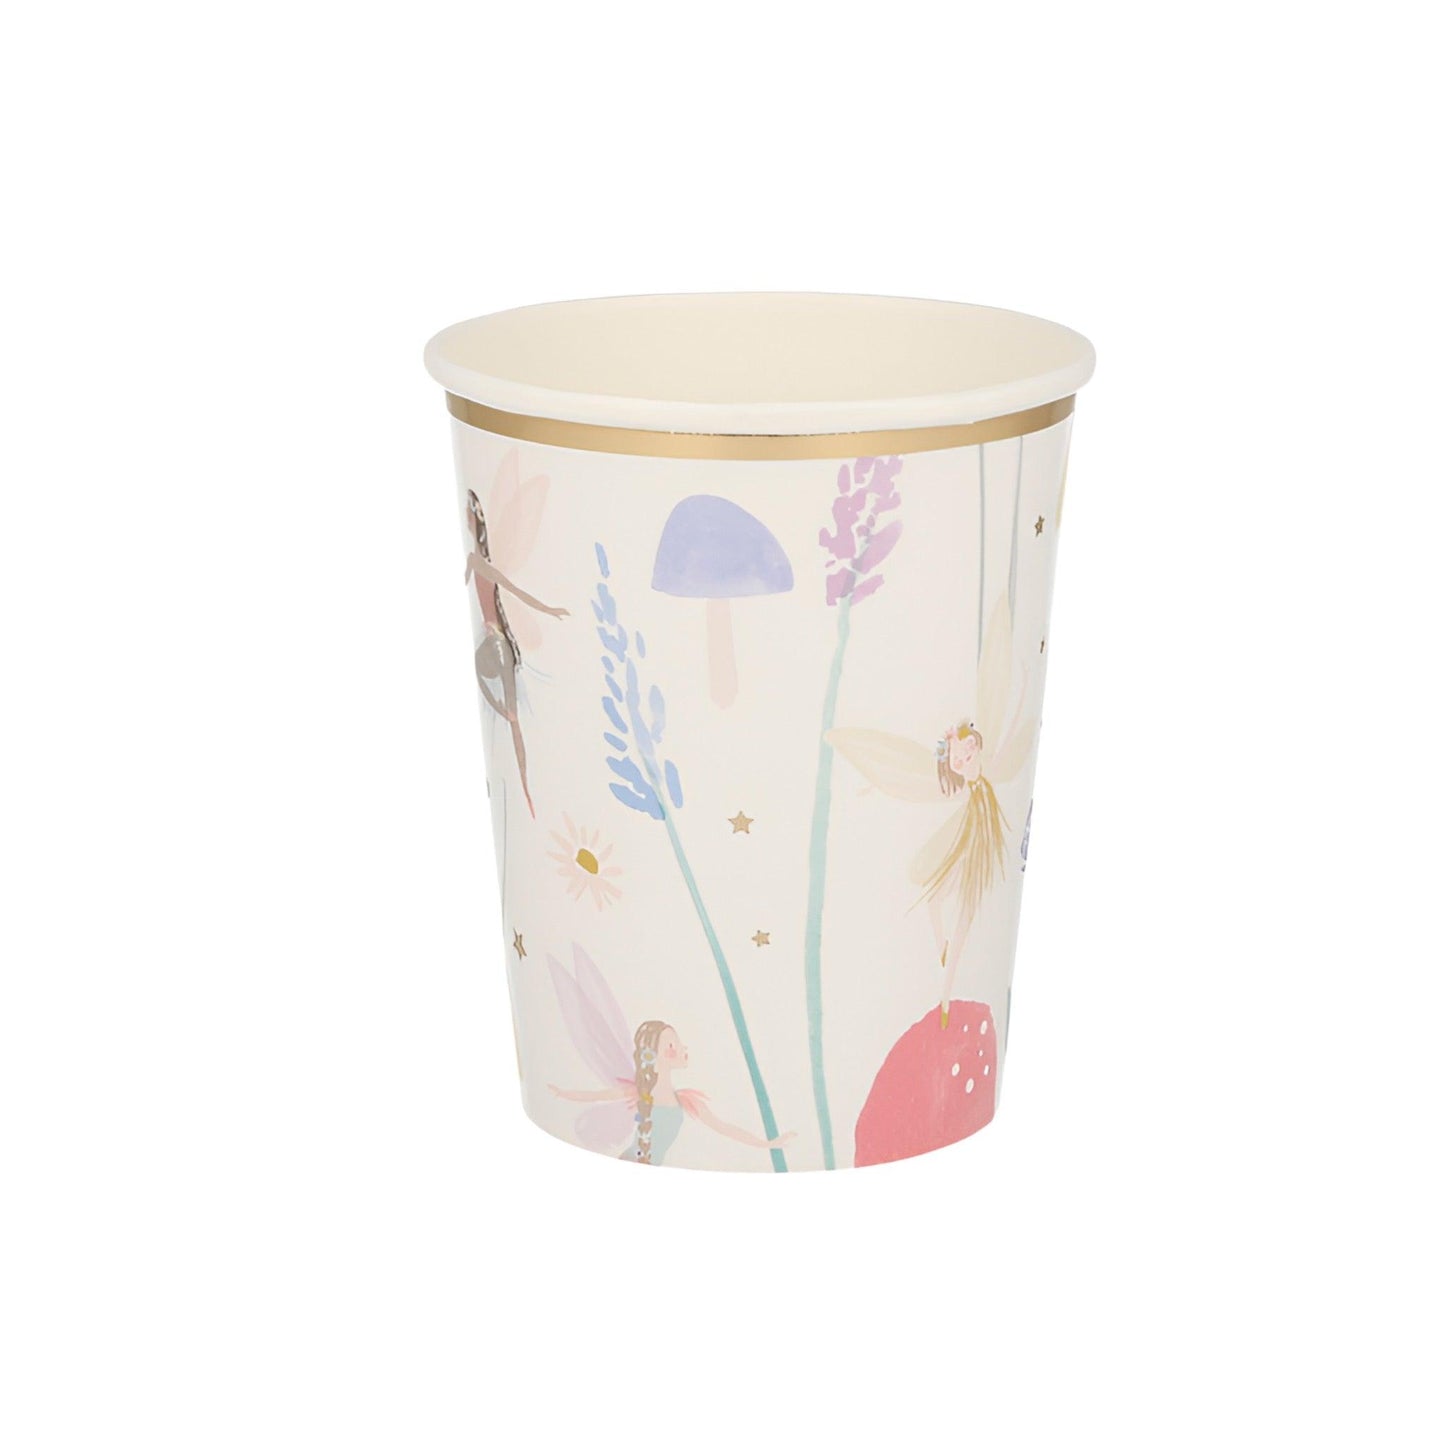 Paper Fairy Cup By Meri Meri With Fairies, Toadstools & Flowers.